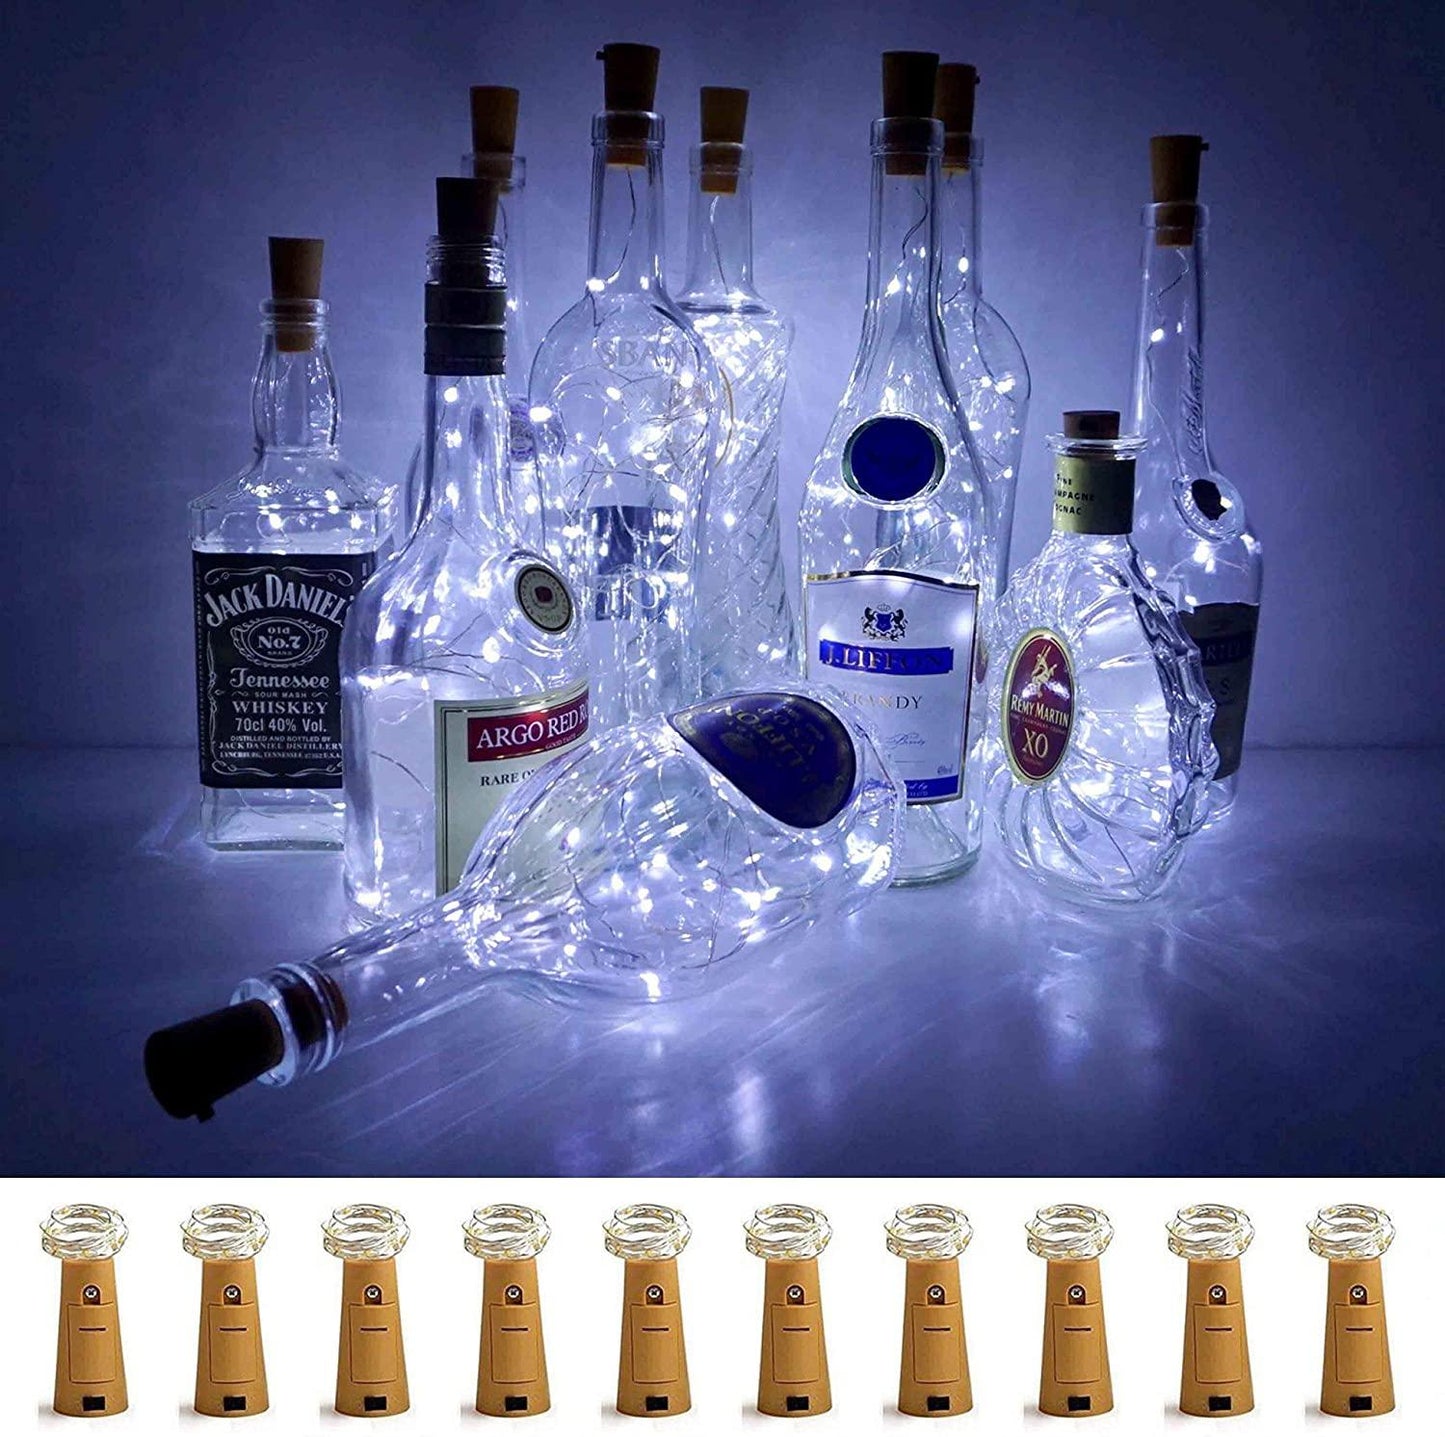 Wine Bottle Cork Lights for Party Wedding Bedroom Festival Halloween Bar Jar Lamp Decoration - If you say i do